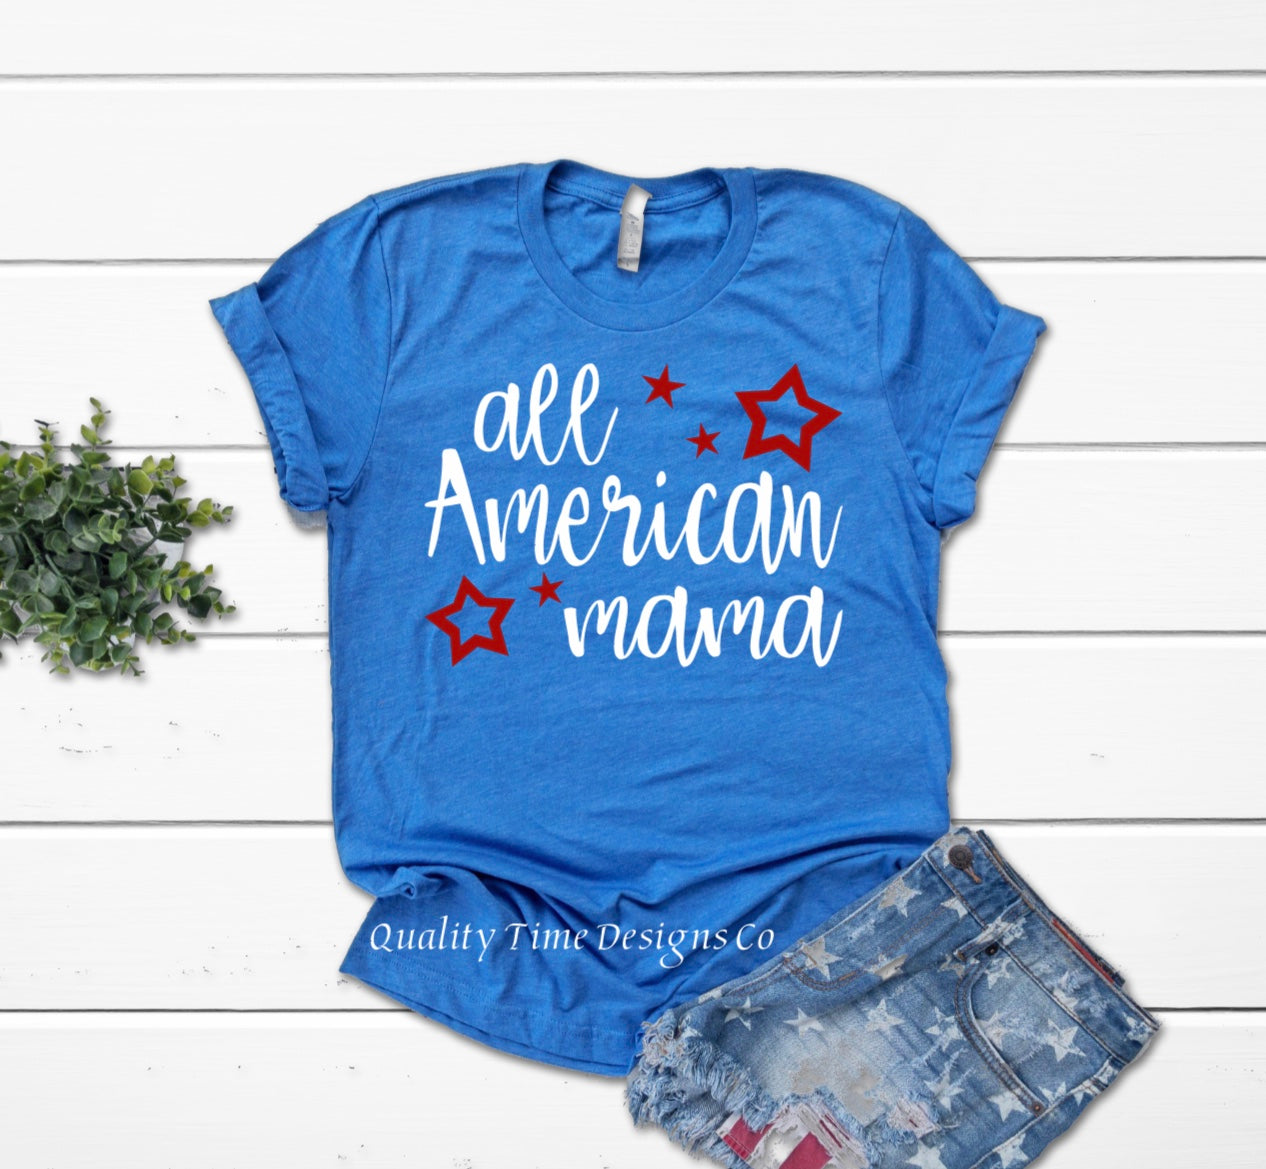 All American Mama t-shirt 